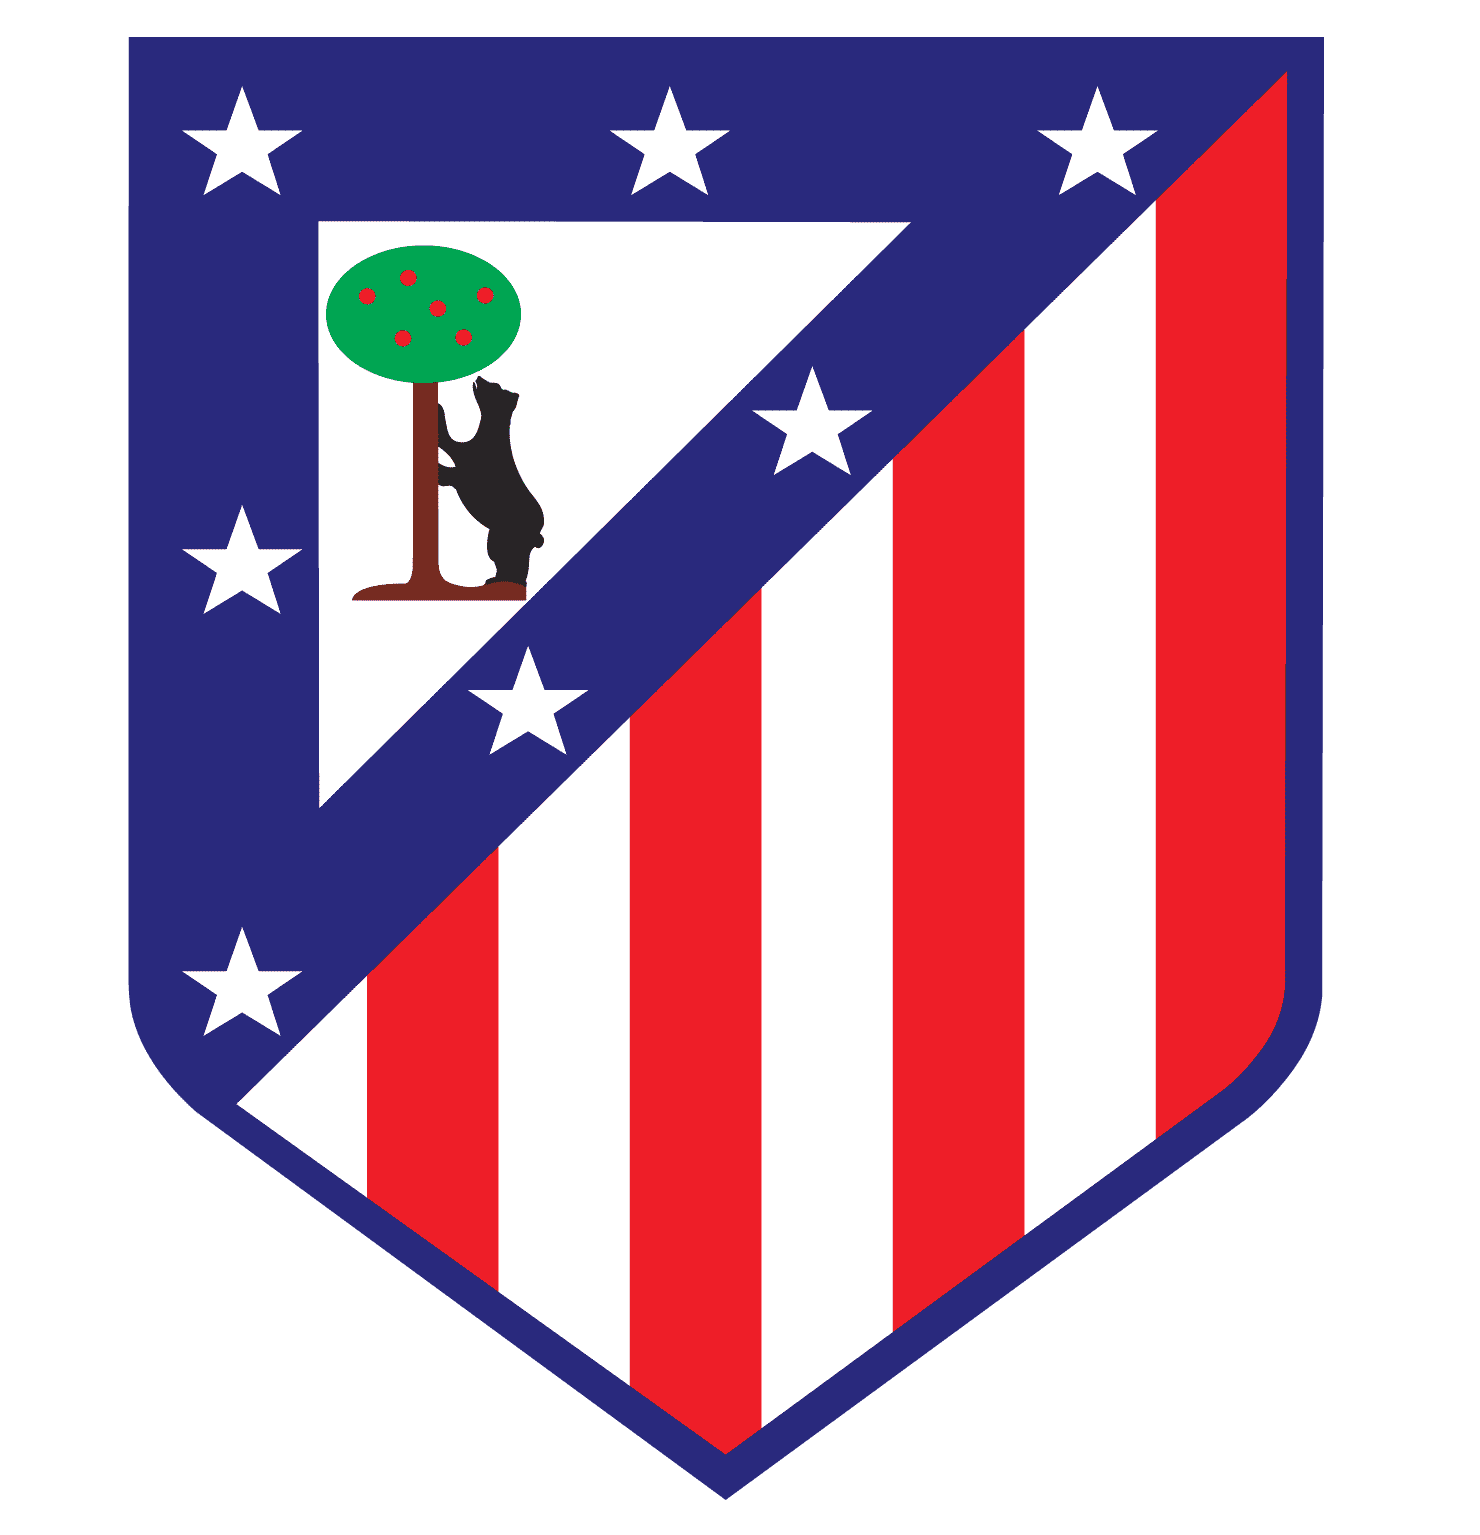 Atletico de Madrid (w) logo